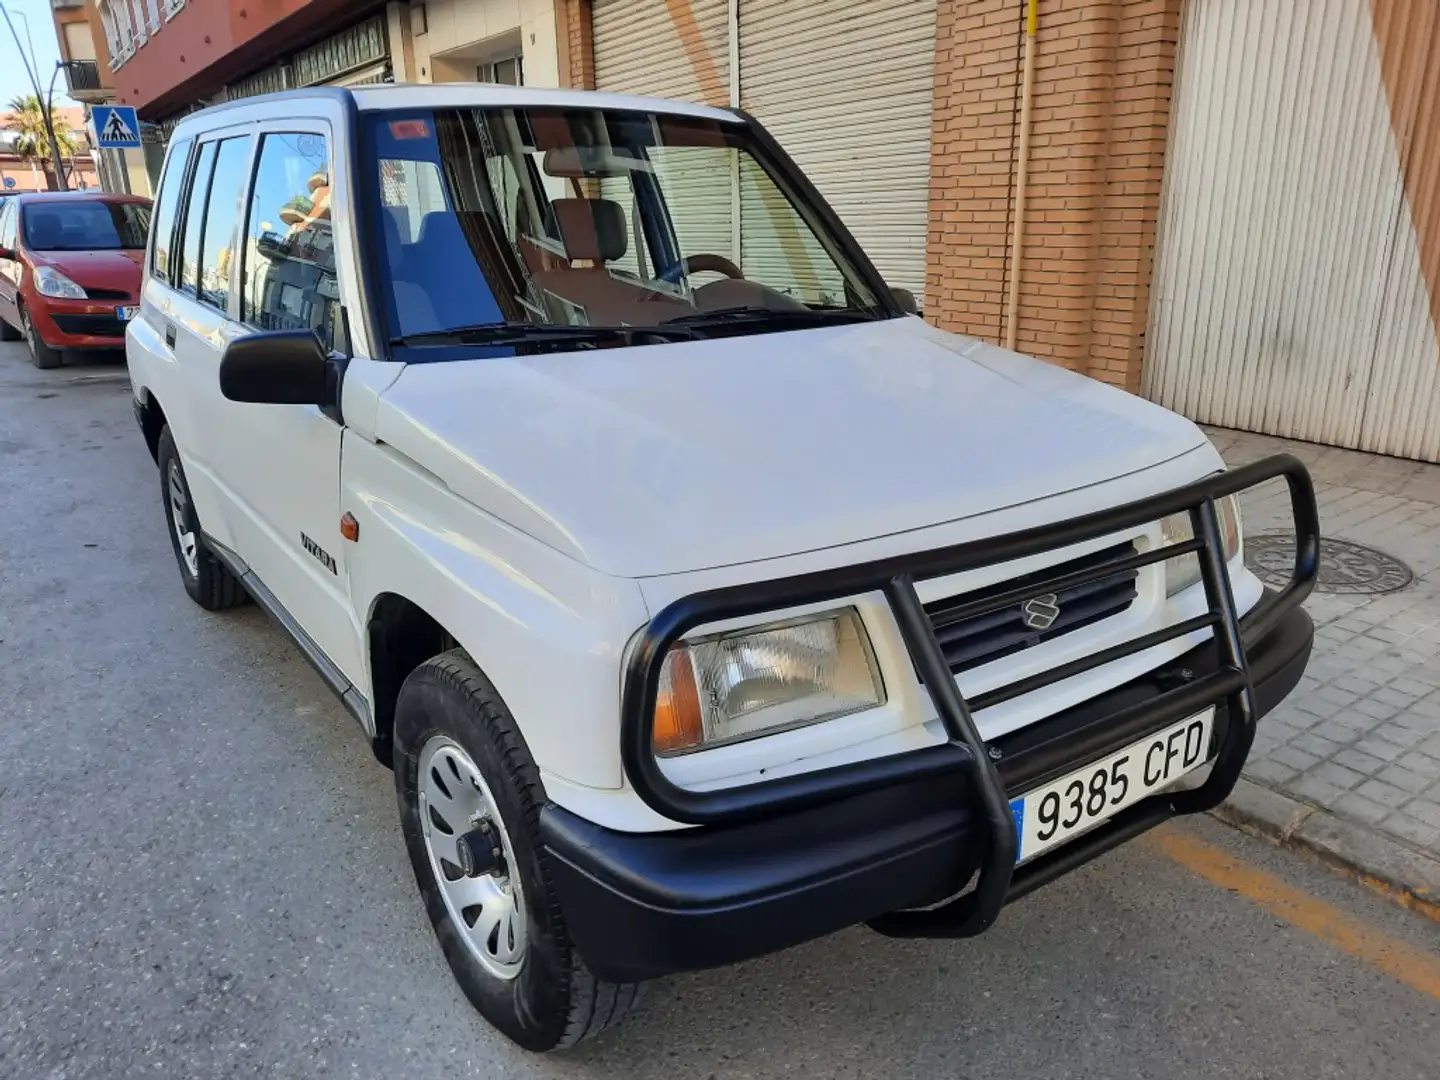 Suzuki Vitara SUV/4x4/Pickup en Blanco ocasión en UBEDA por € 7.850,-